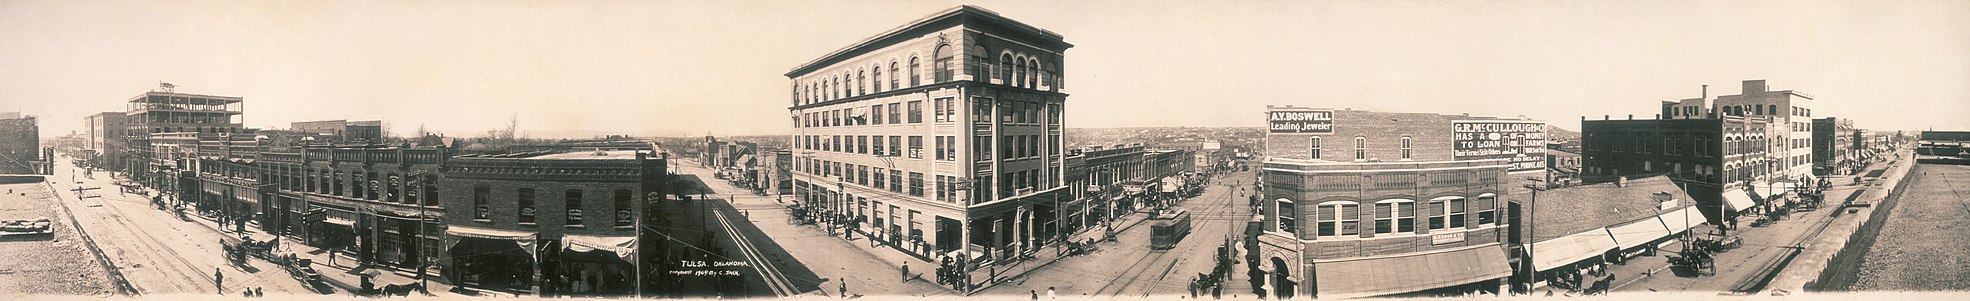 Tulsa, Oklahoma Şehri'nin panoramik görünüşü, 1909